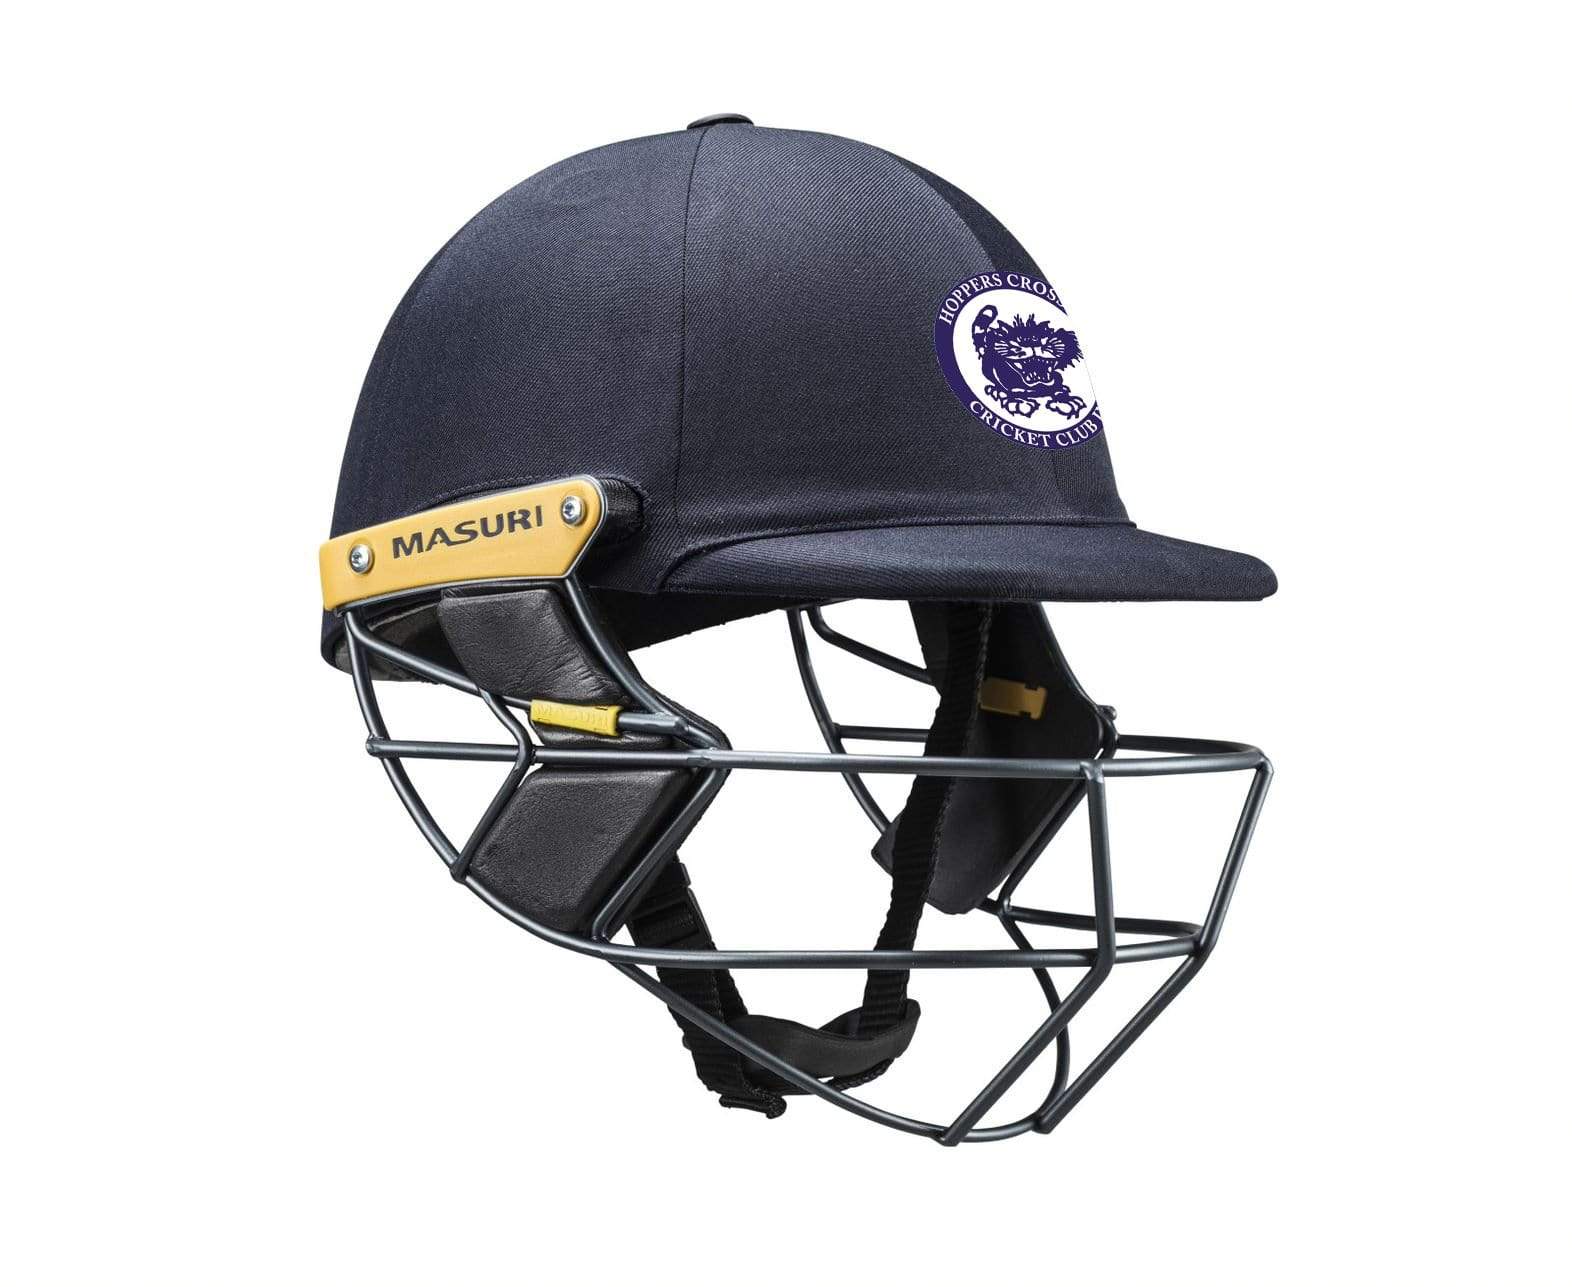 Masuri Club Helmet Hoppers Crossing Cricket Club Helmet